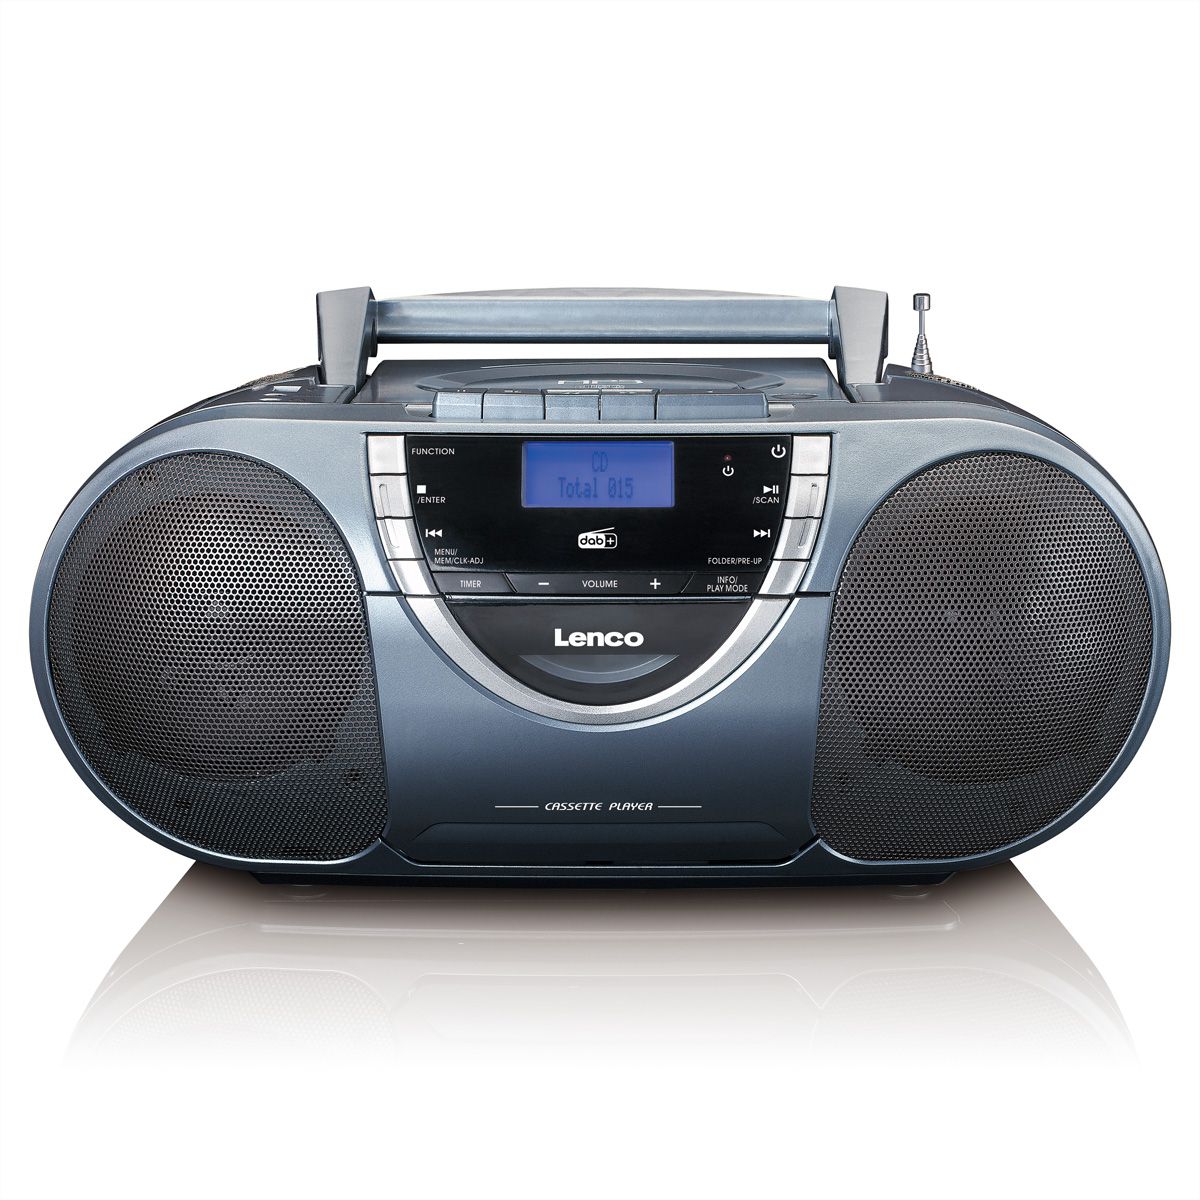 Kassette, CD/MP3-Player, SCD-6800, DAB+-Radio/Boombox FM, SECOMP DAB+, Nederland - grau Lenco GmbH